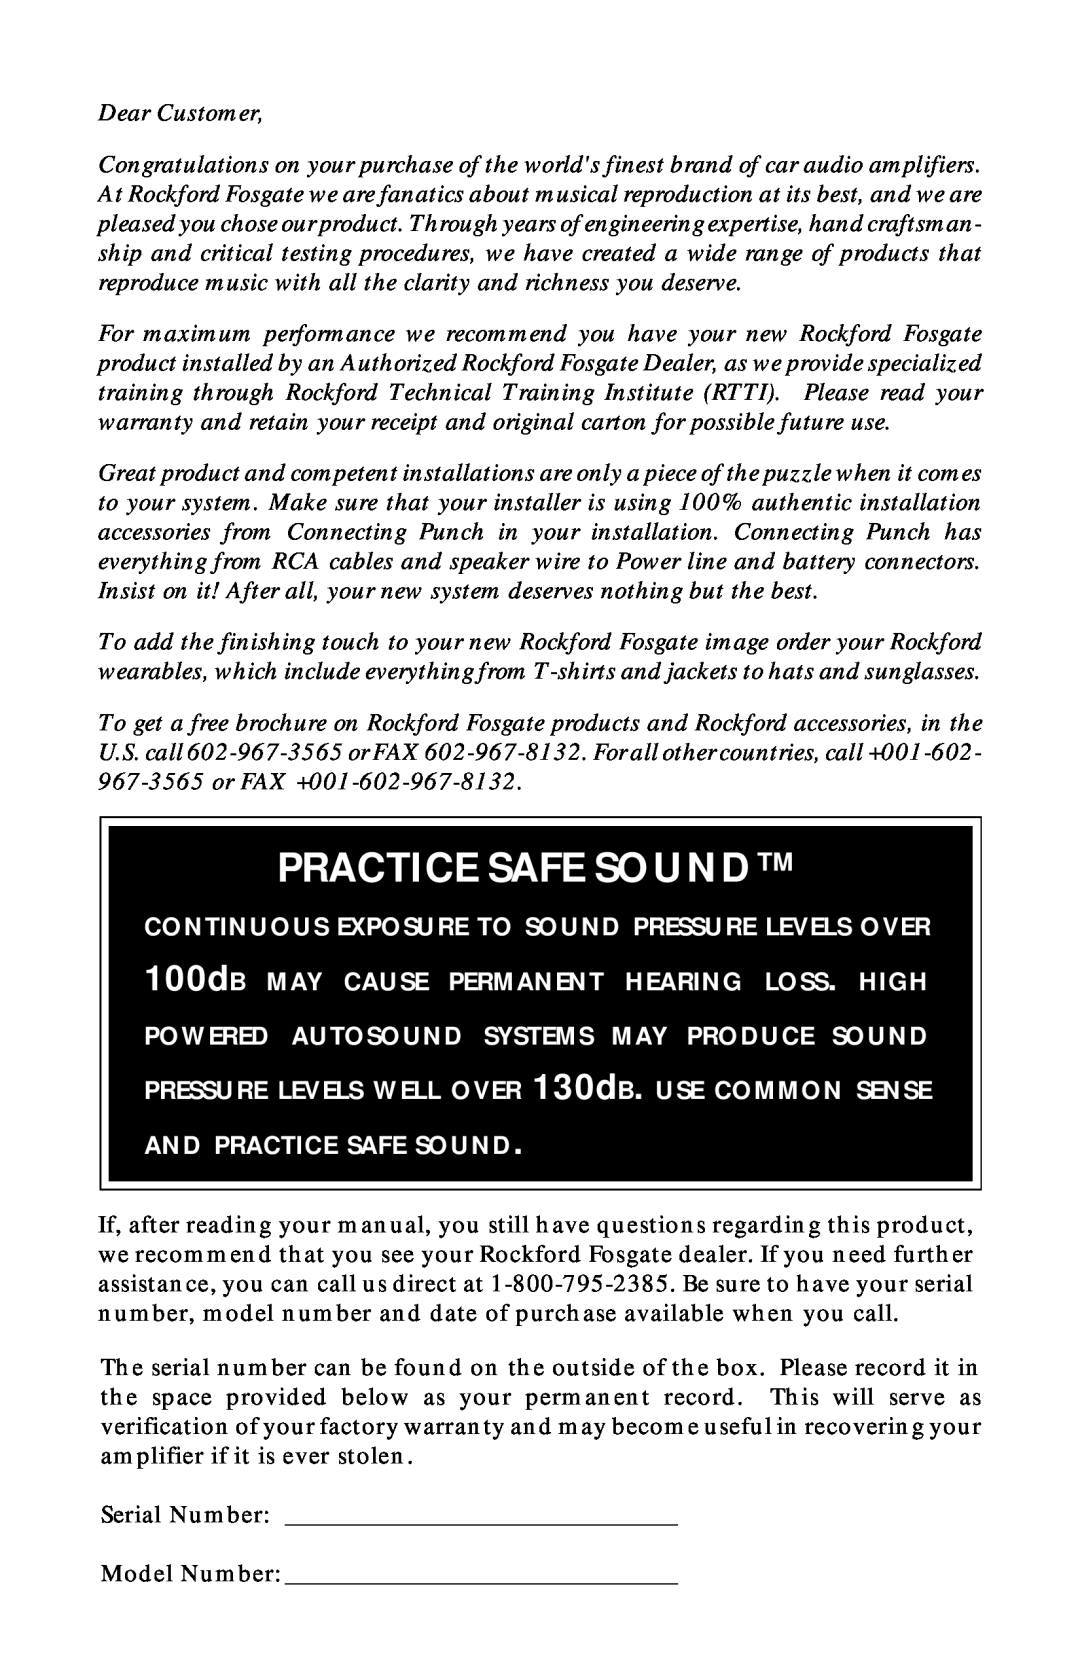 Rockford Fosgate 40X2 manual Practice Safe Sound 